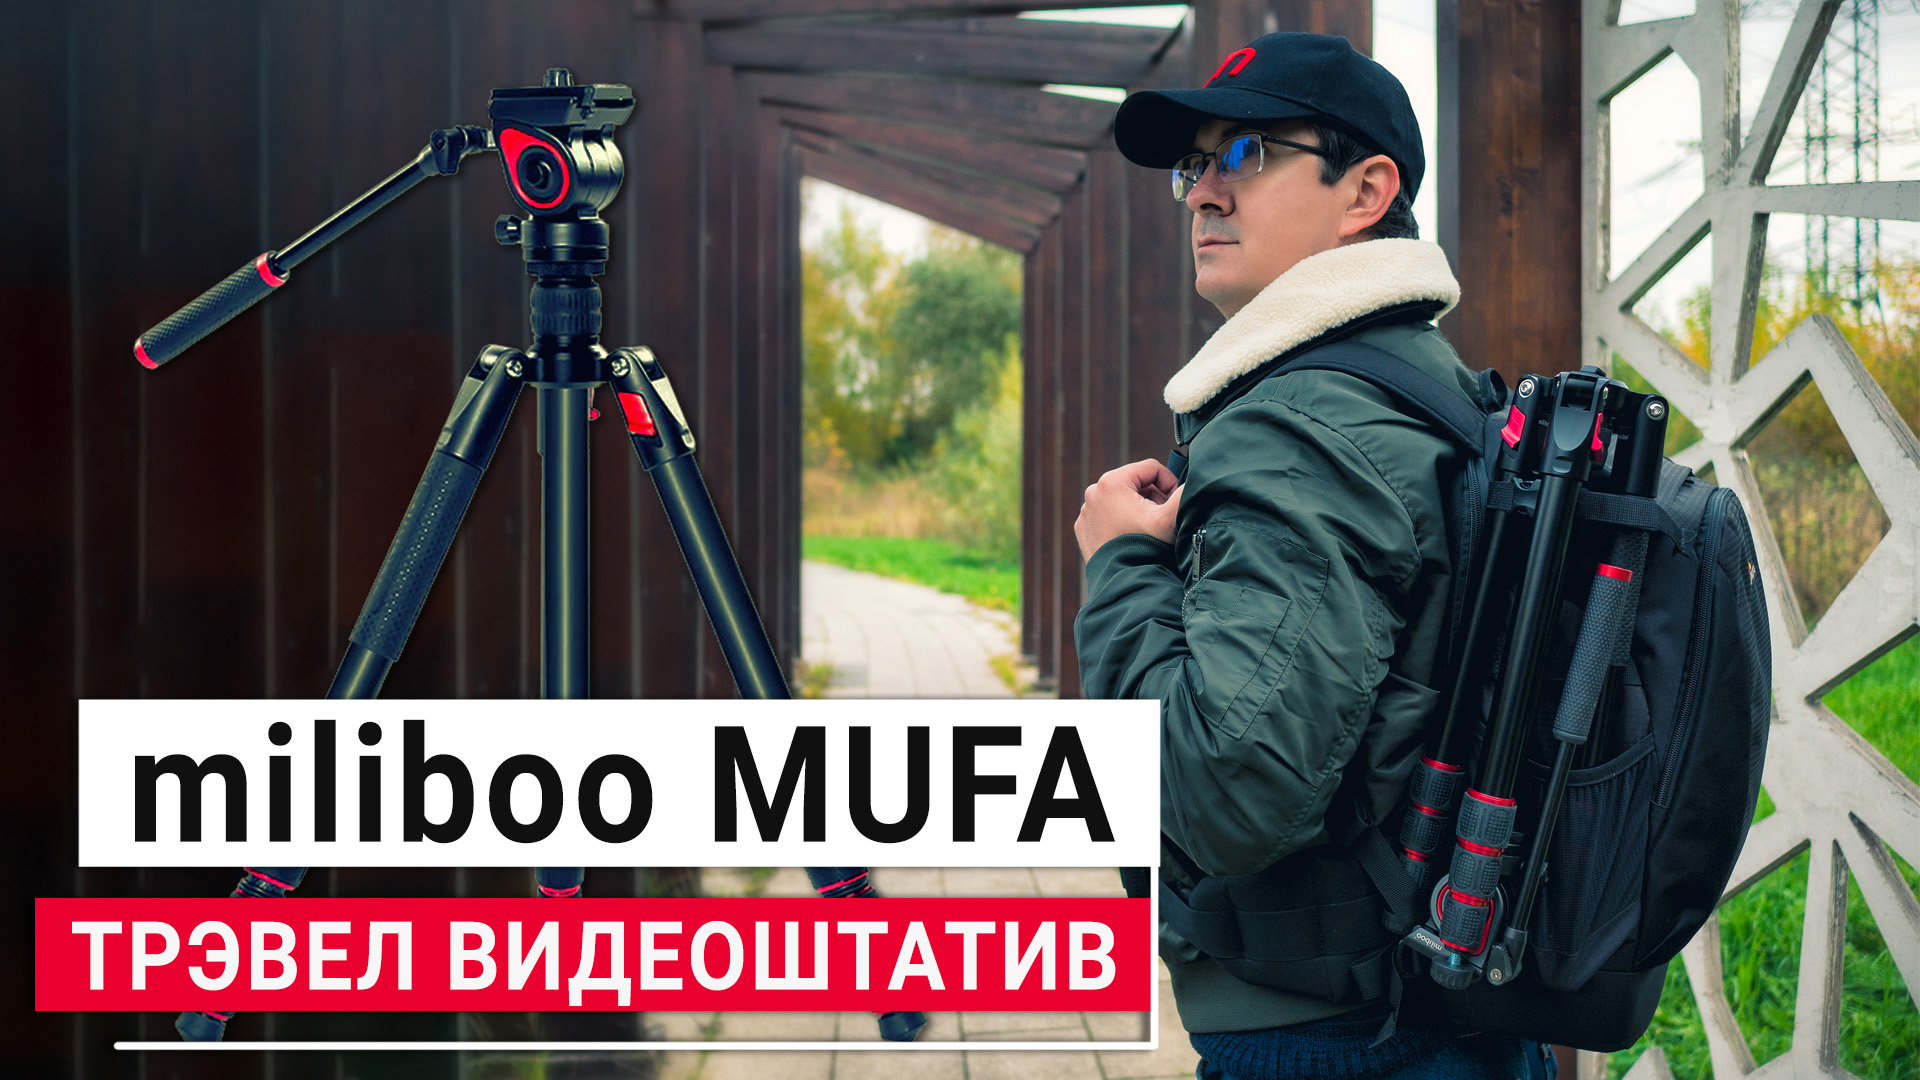 Miliboo MUFA | Обзор бюджетного трэвел видеоштатива